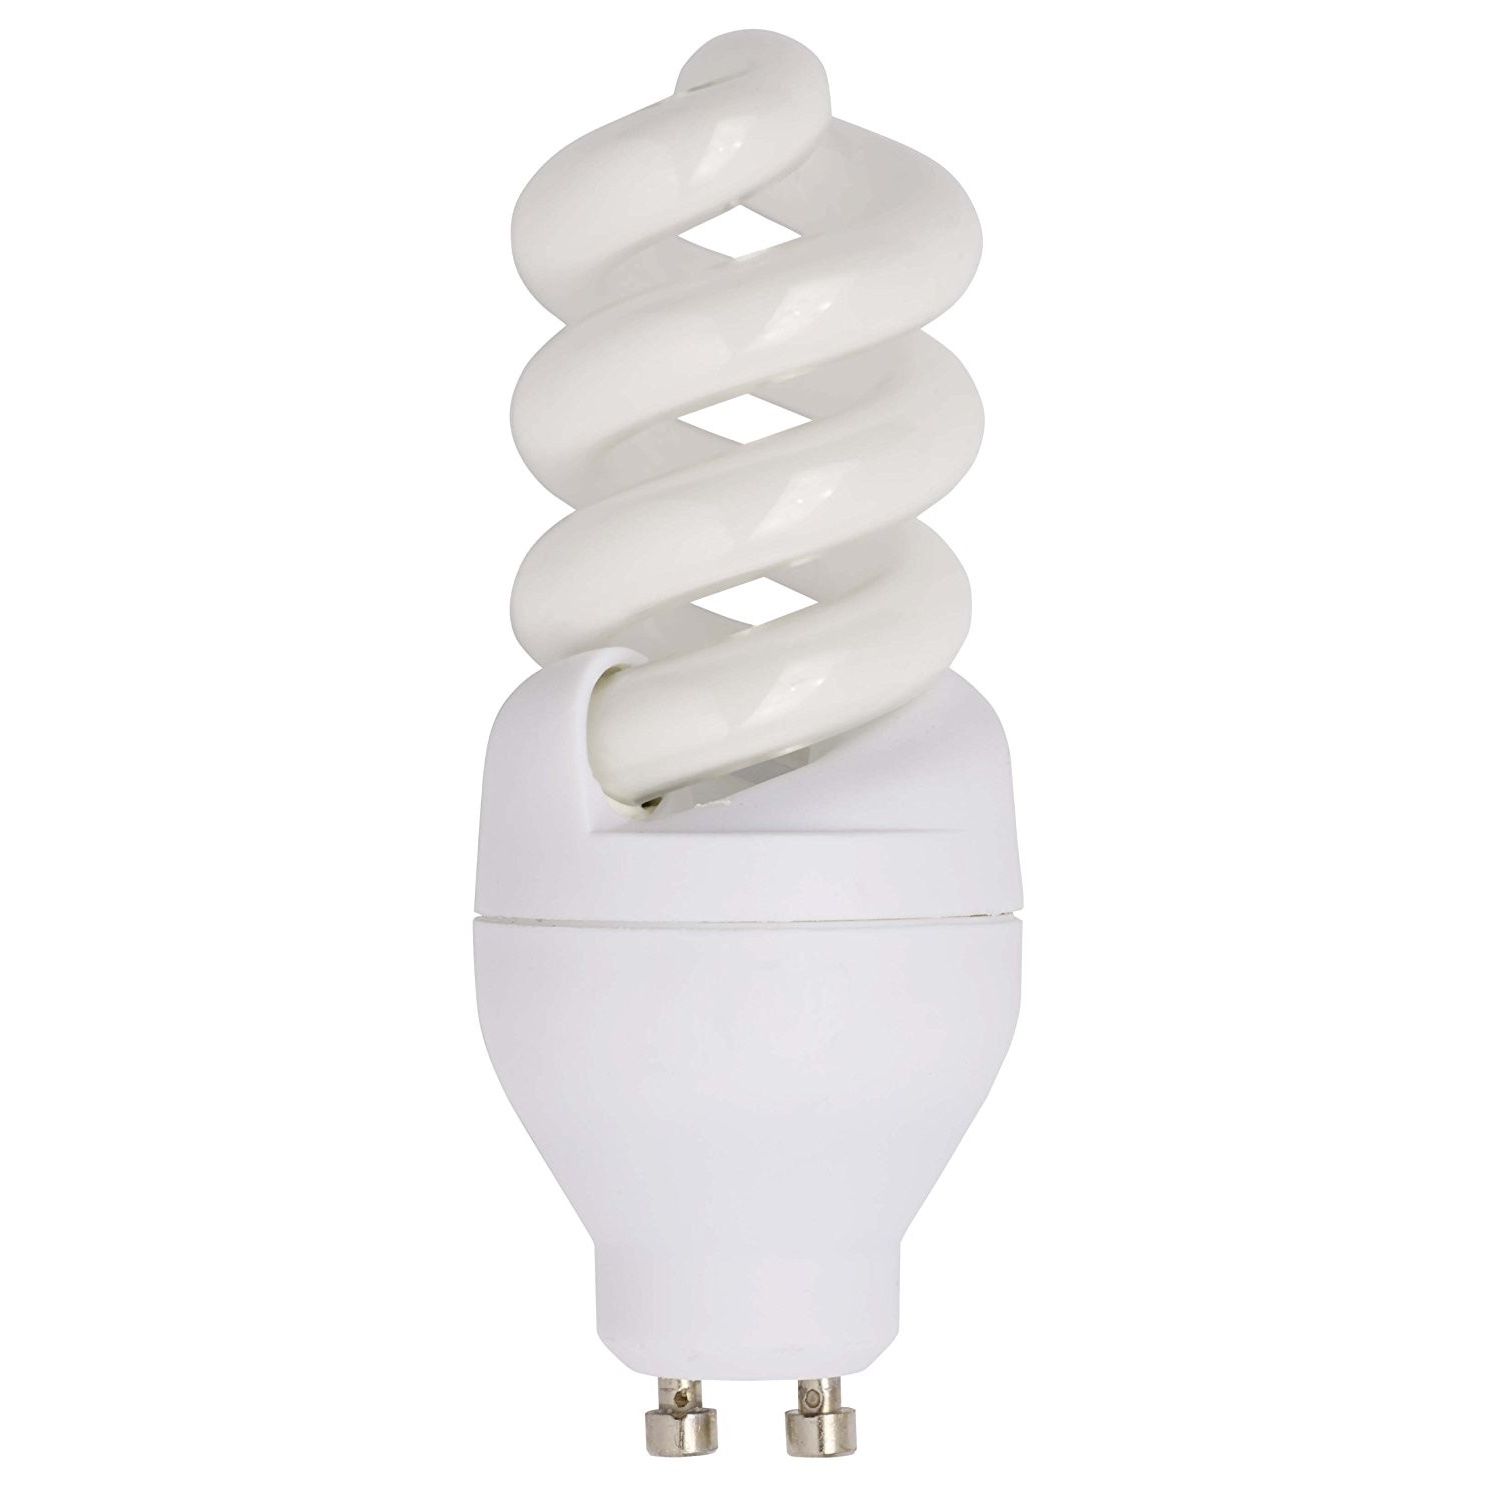 Aan ballon omhelzing Spaarlamp - GU10 - 9W - warm wit (laatste stuks!) | Lichtkoning